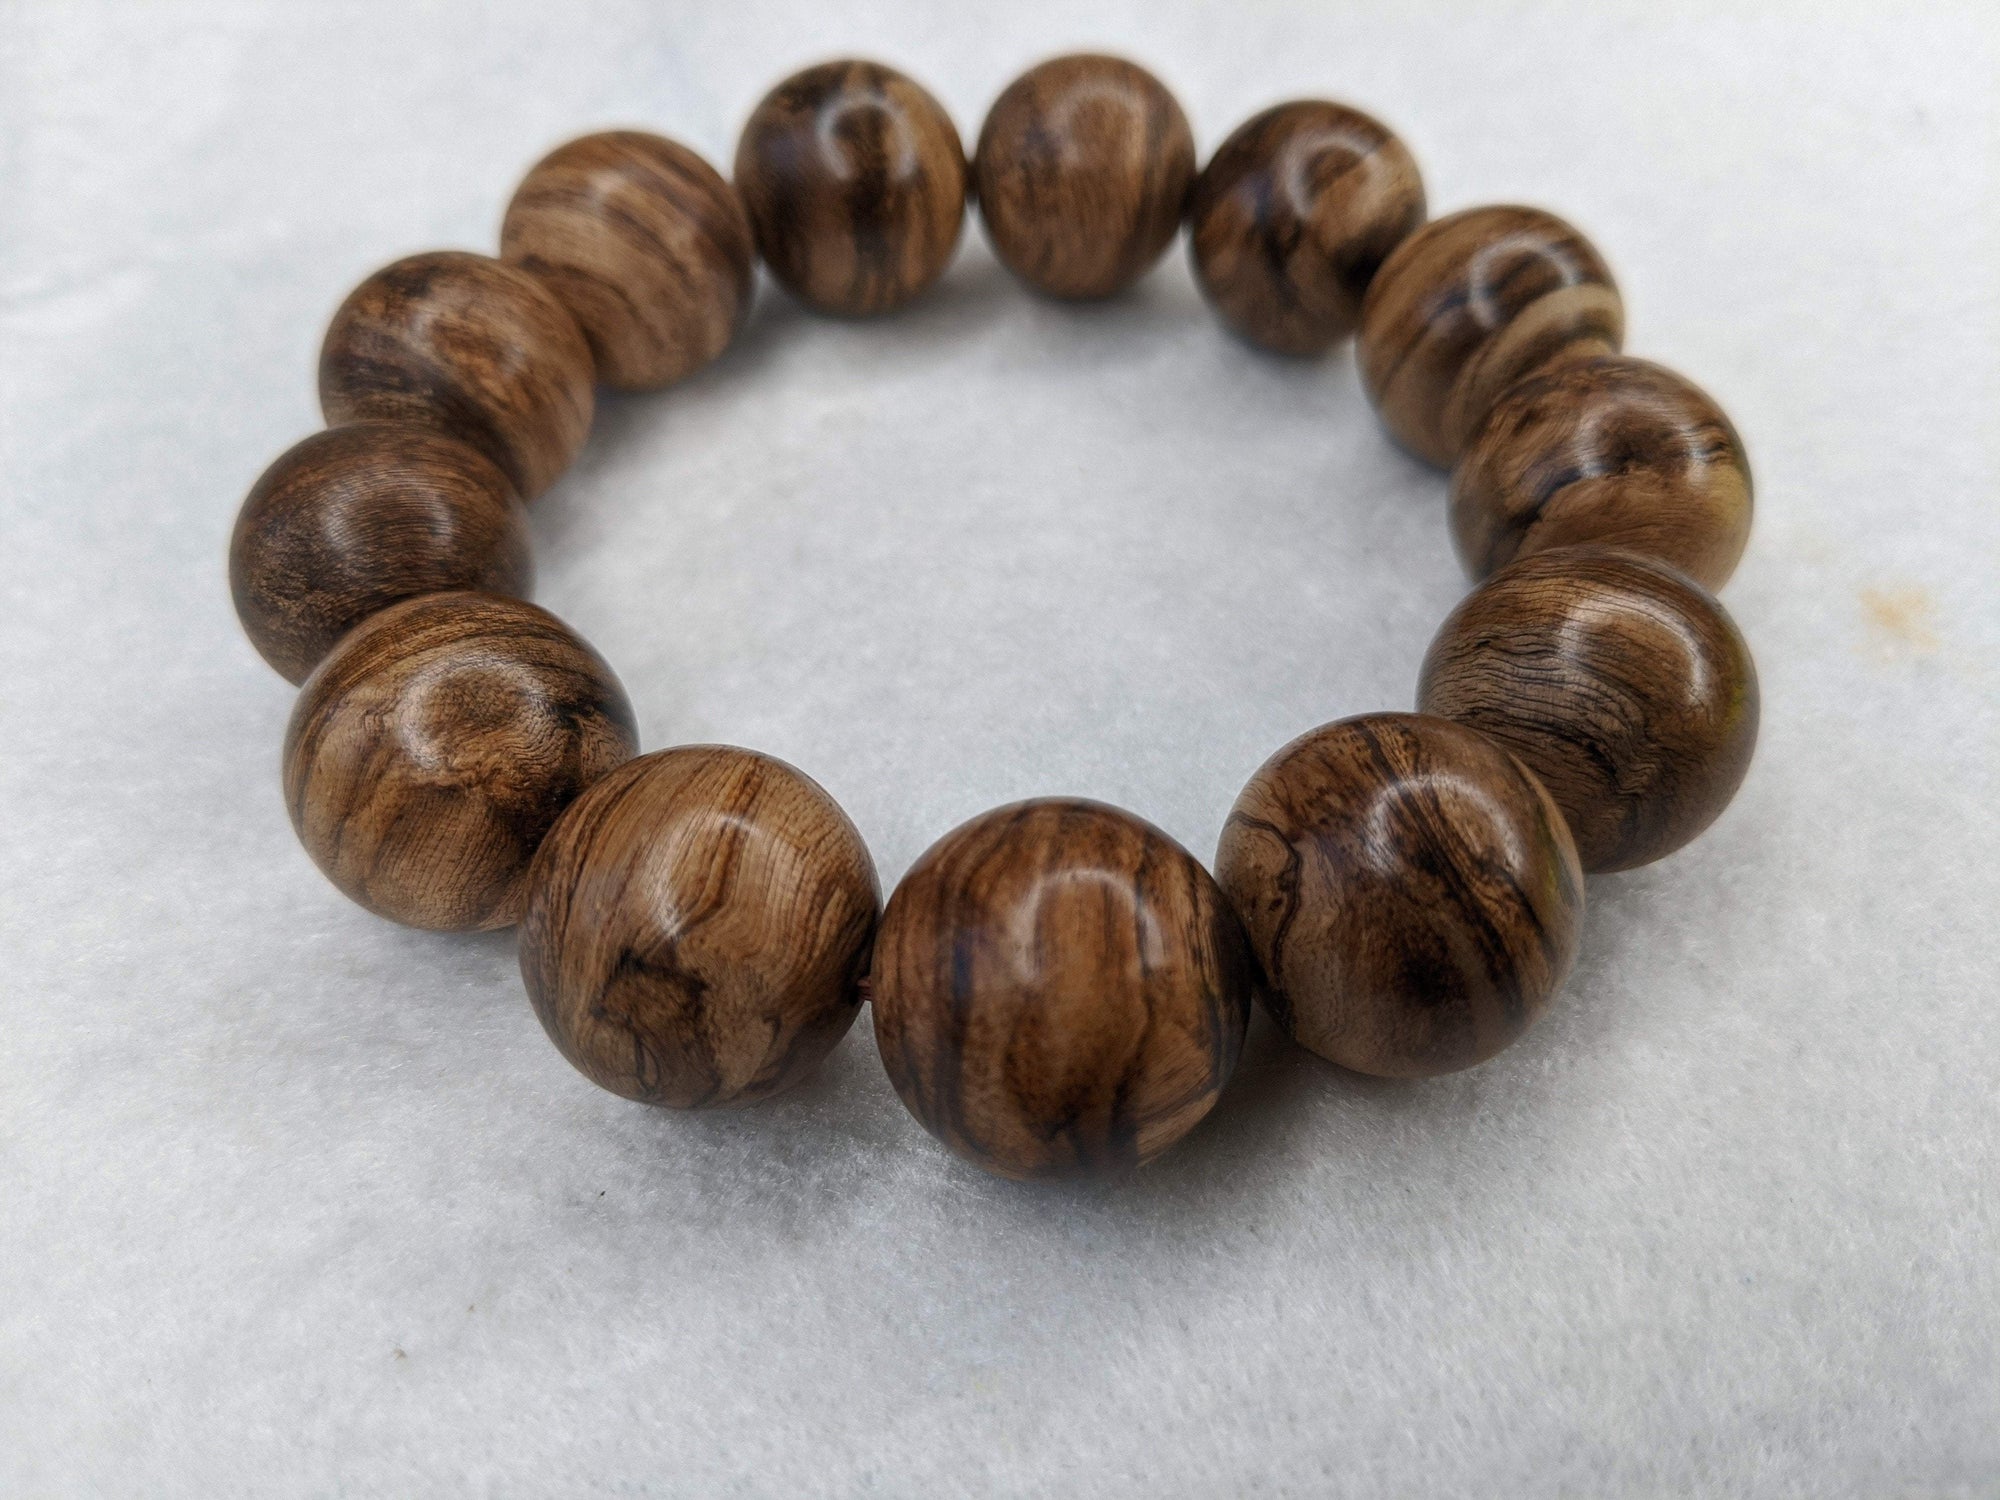 Black Scars - Borneo Wild Agarwood Bracelet 13 beads 30g 18mm -